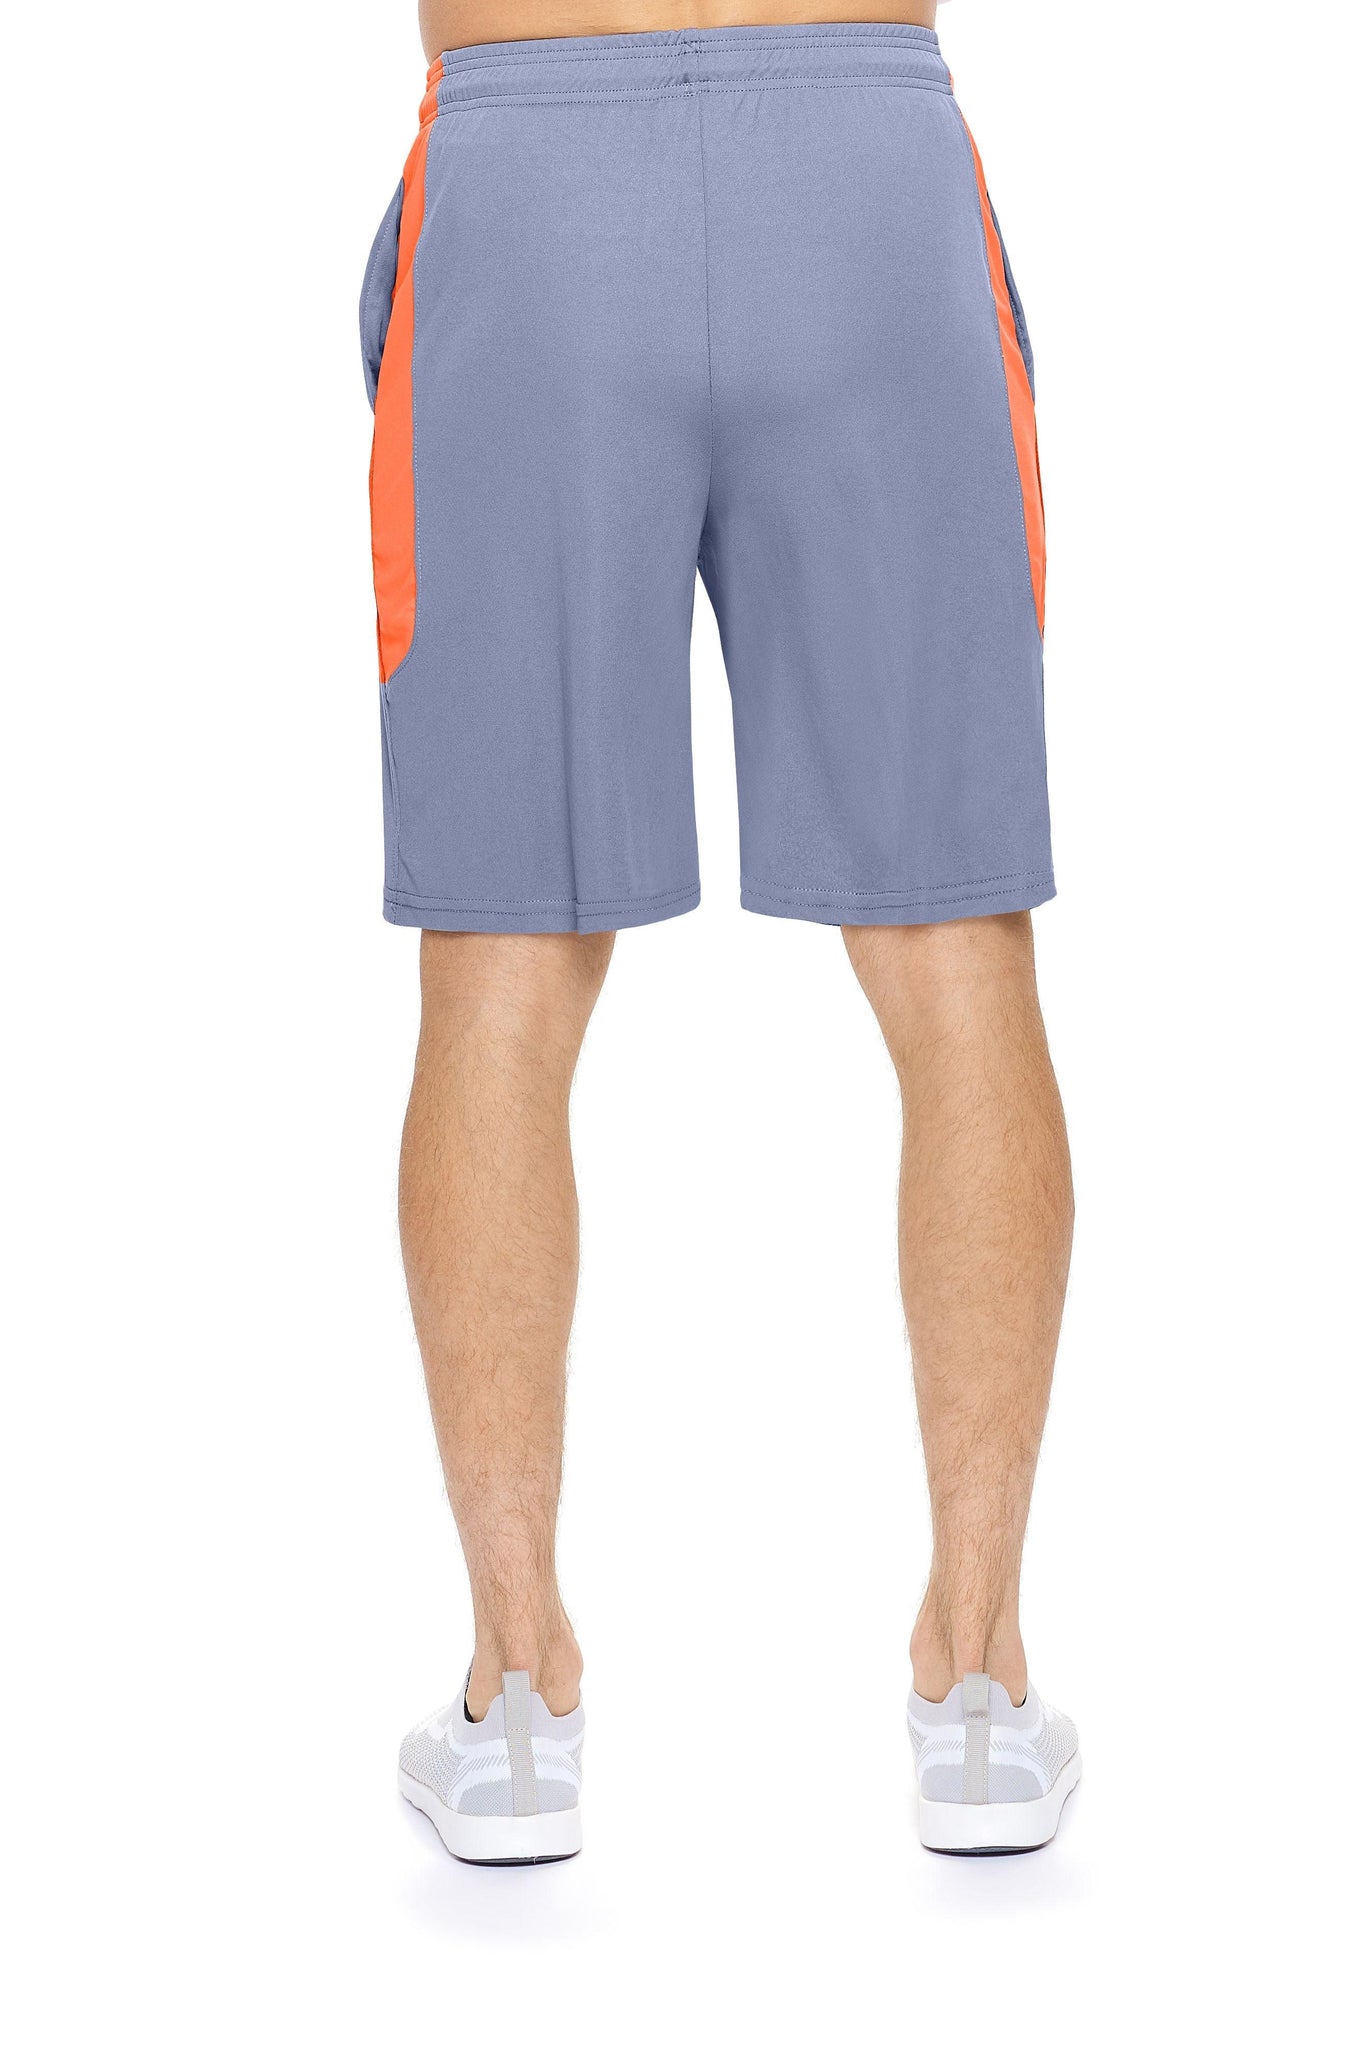 Expert Brand Men's Steel Orange pk MaX™ Outdoor Shorts Image 3#steel-safety-orange